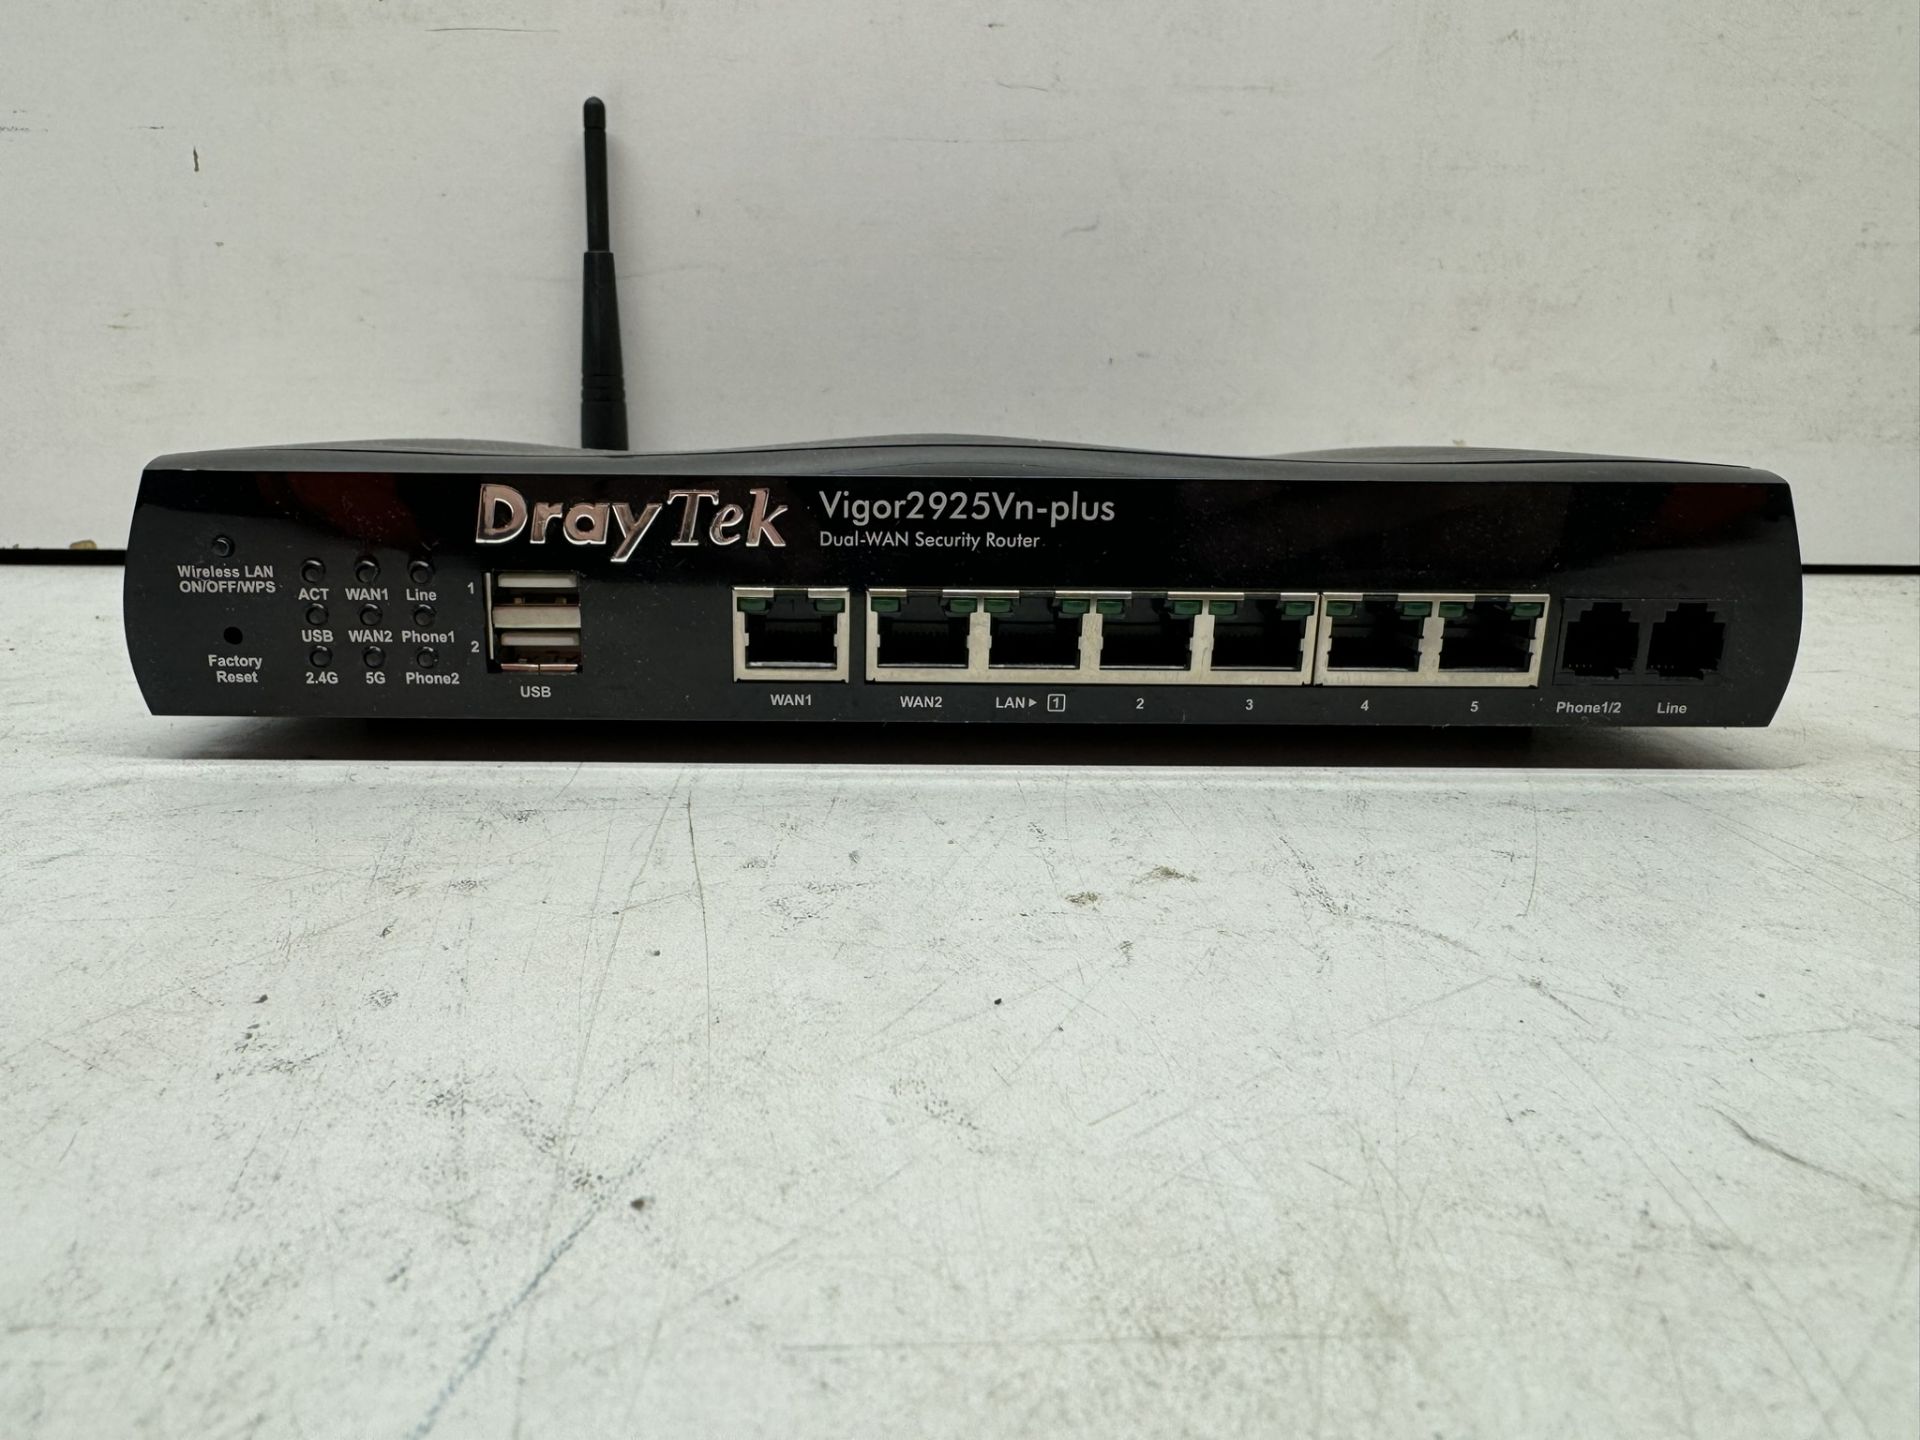 Draytek Vigor 2925Vn Plus Dual-WAN Security Router - Image 2 of 4